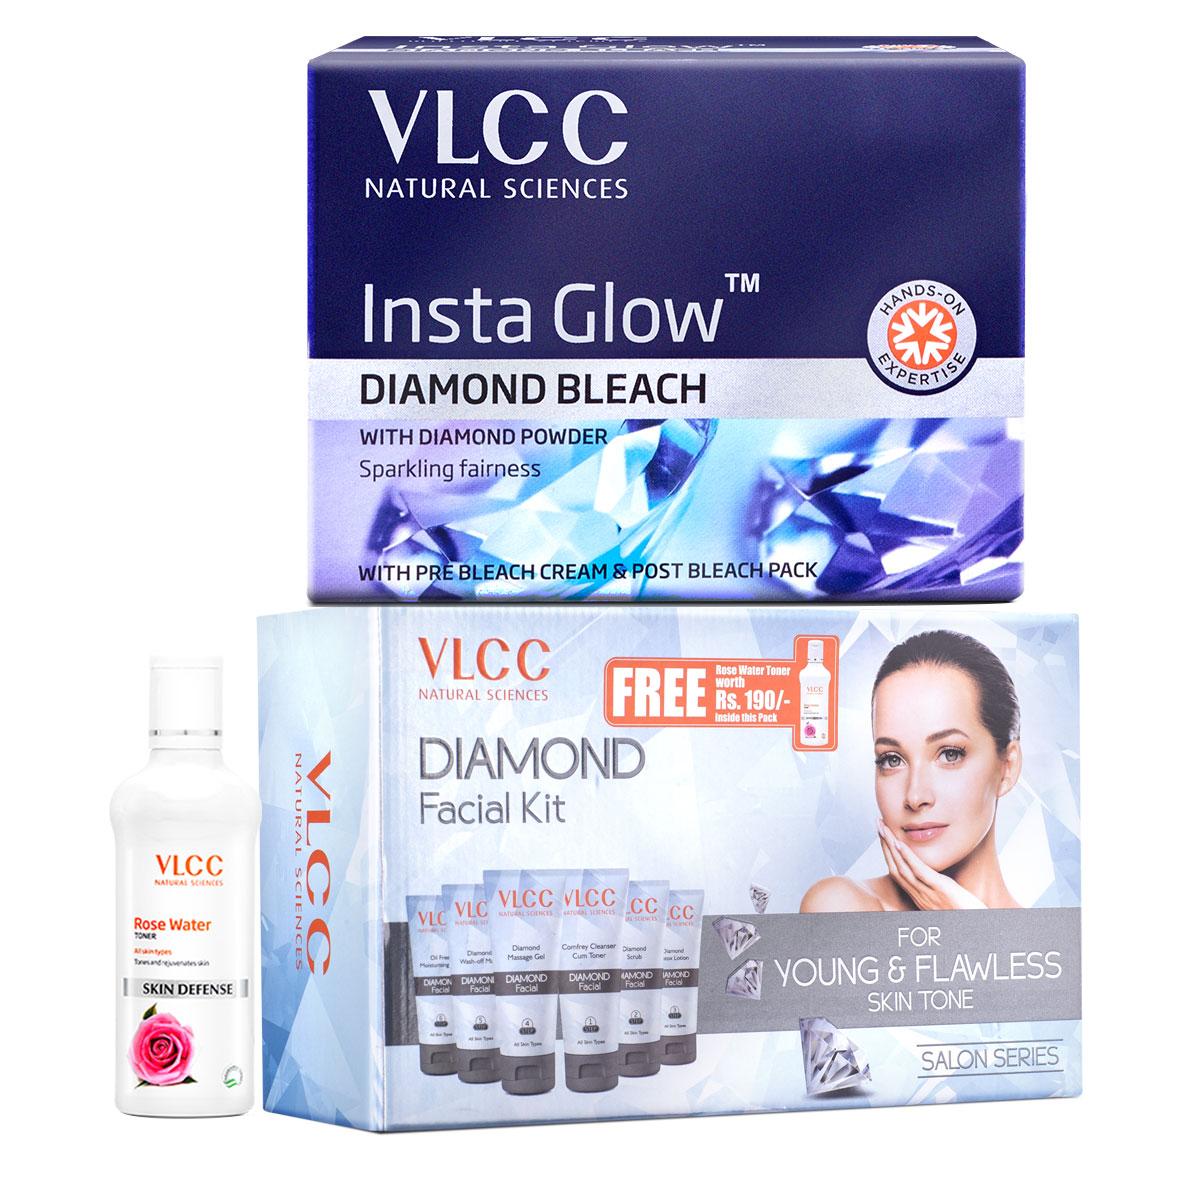 VLCC Diamond Facial Kit with FREE Rose Water Toner & Insta Glow Diamond Bleach